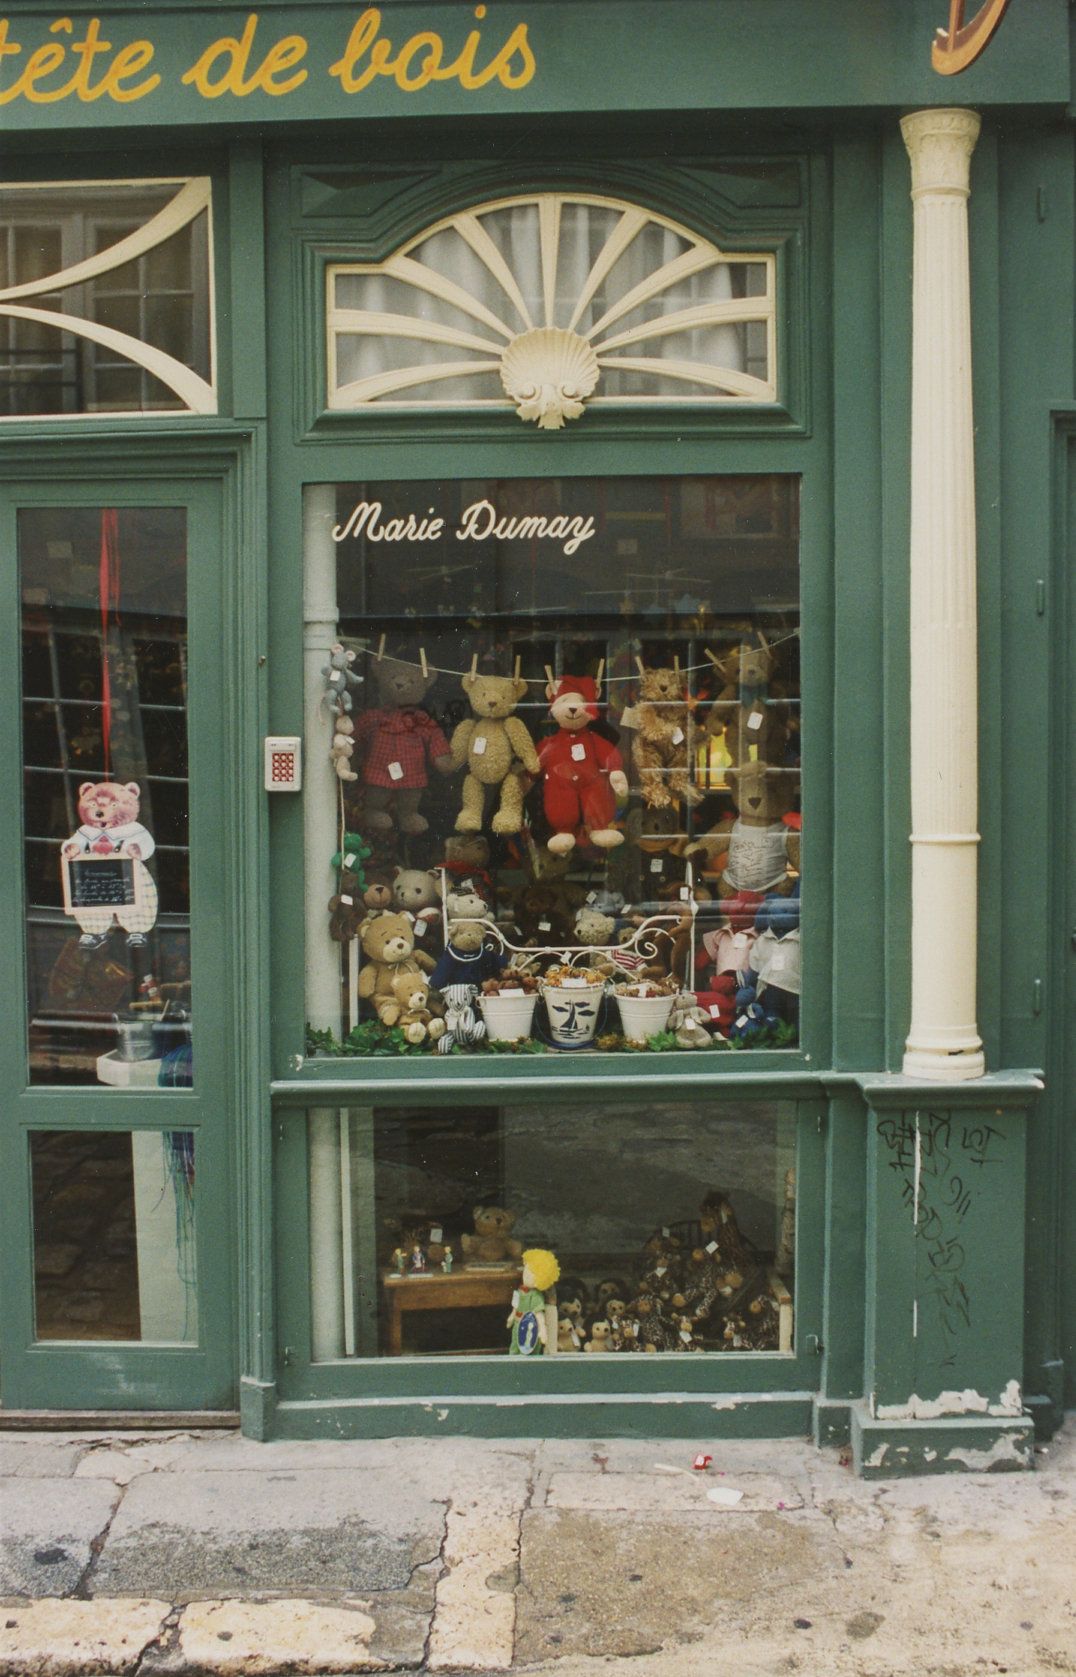 The toy shop on the Cour du Commerce -St-André
Photo ©1998 Ann James Massey